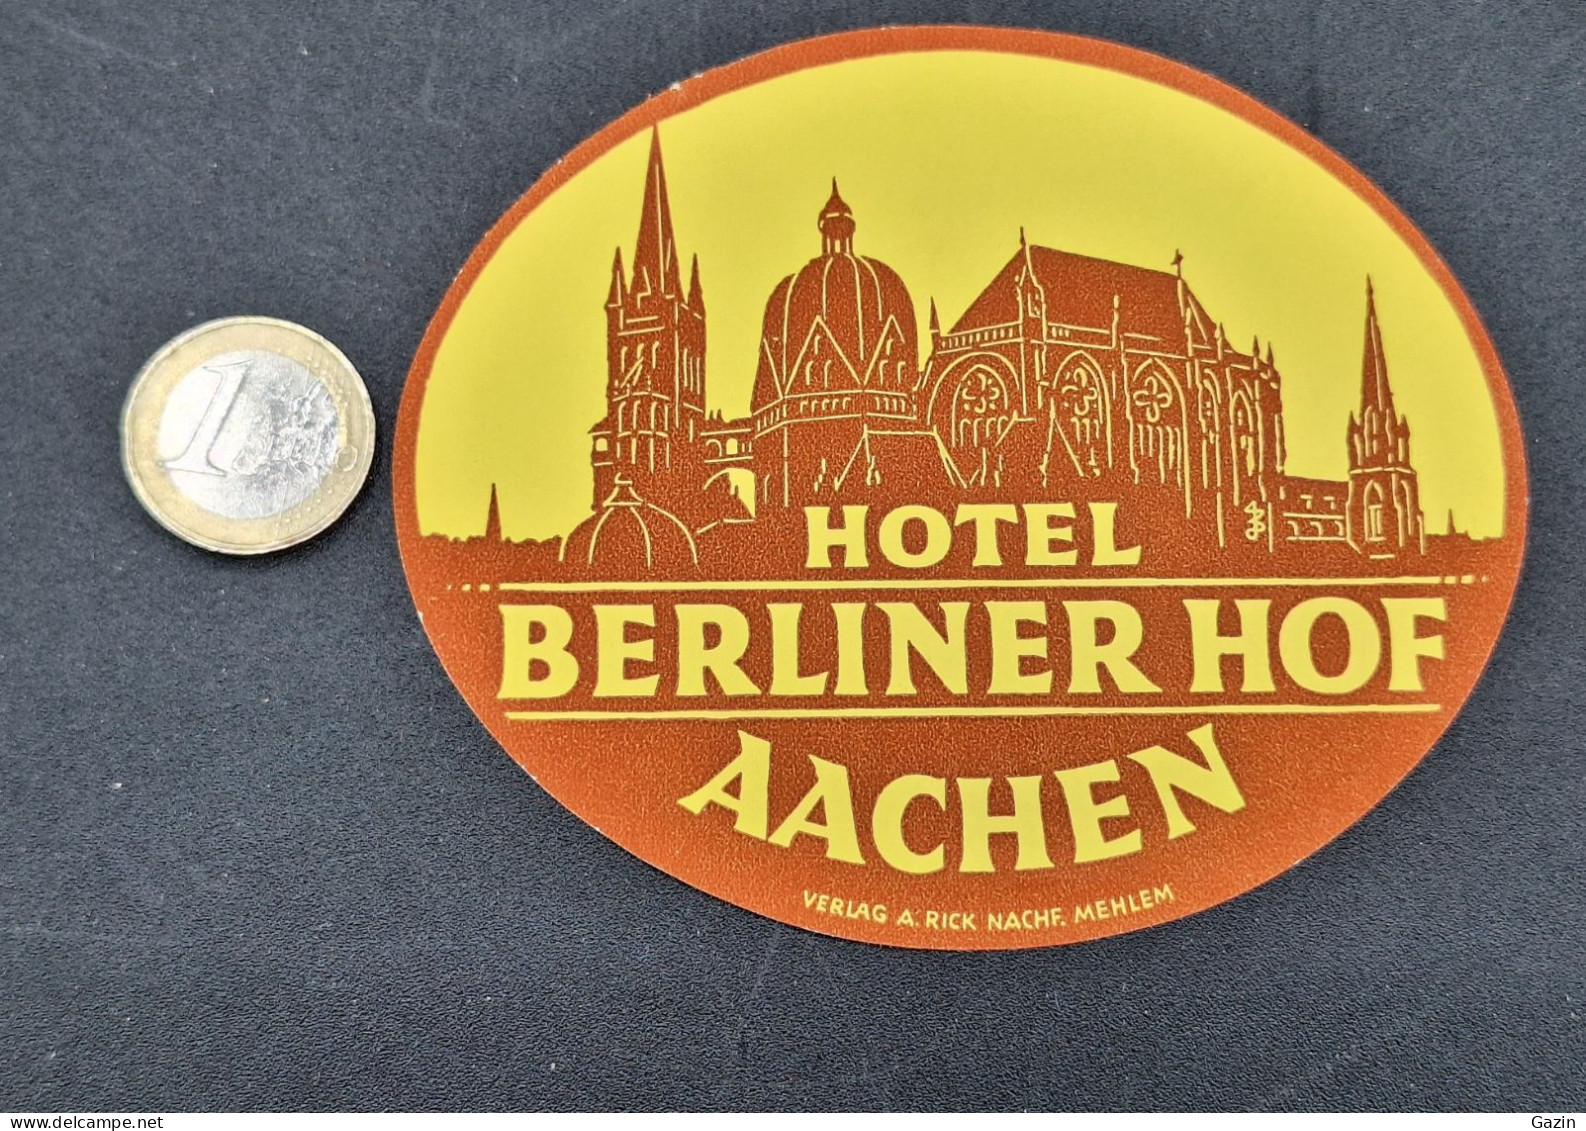 C7/3 - Hotel Berliner Hof * Aachen * Germany  * Luggage Lable * Rótulo * Etiqueta - Adesivi Di Alberghi